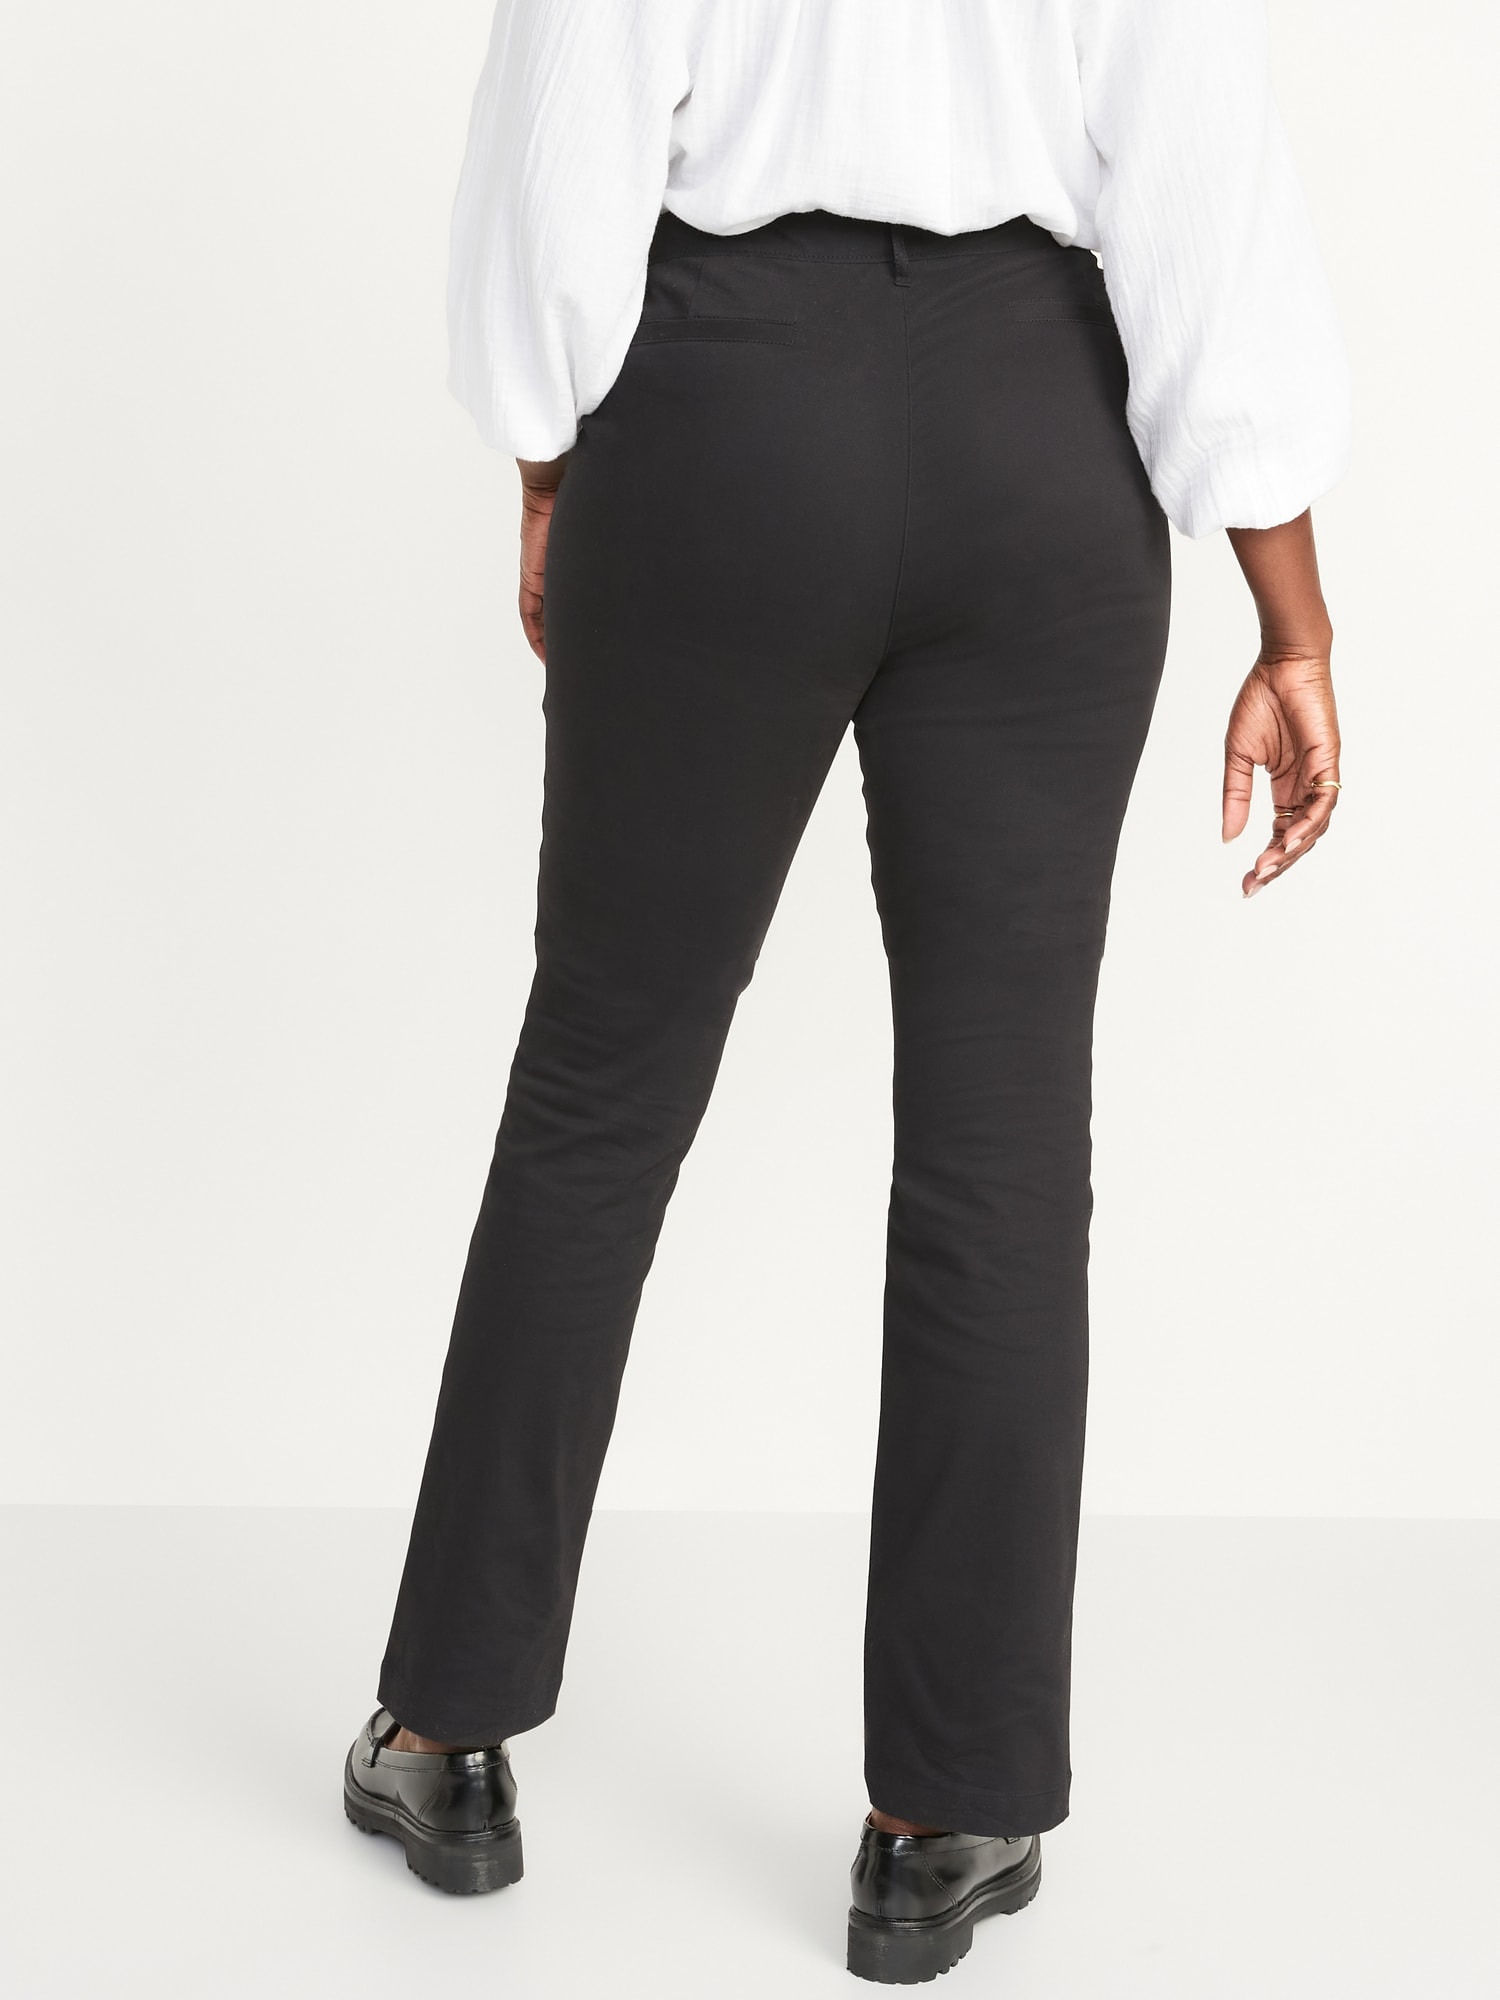 Women's Black Bootcut Trousers